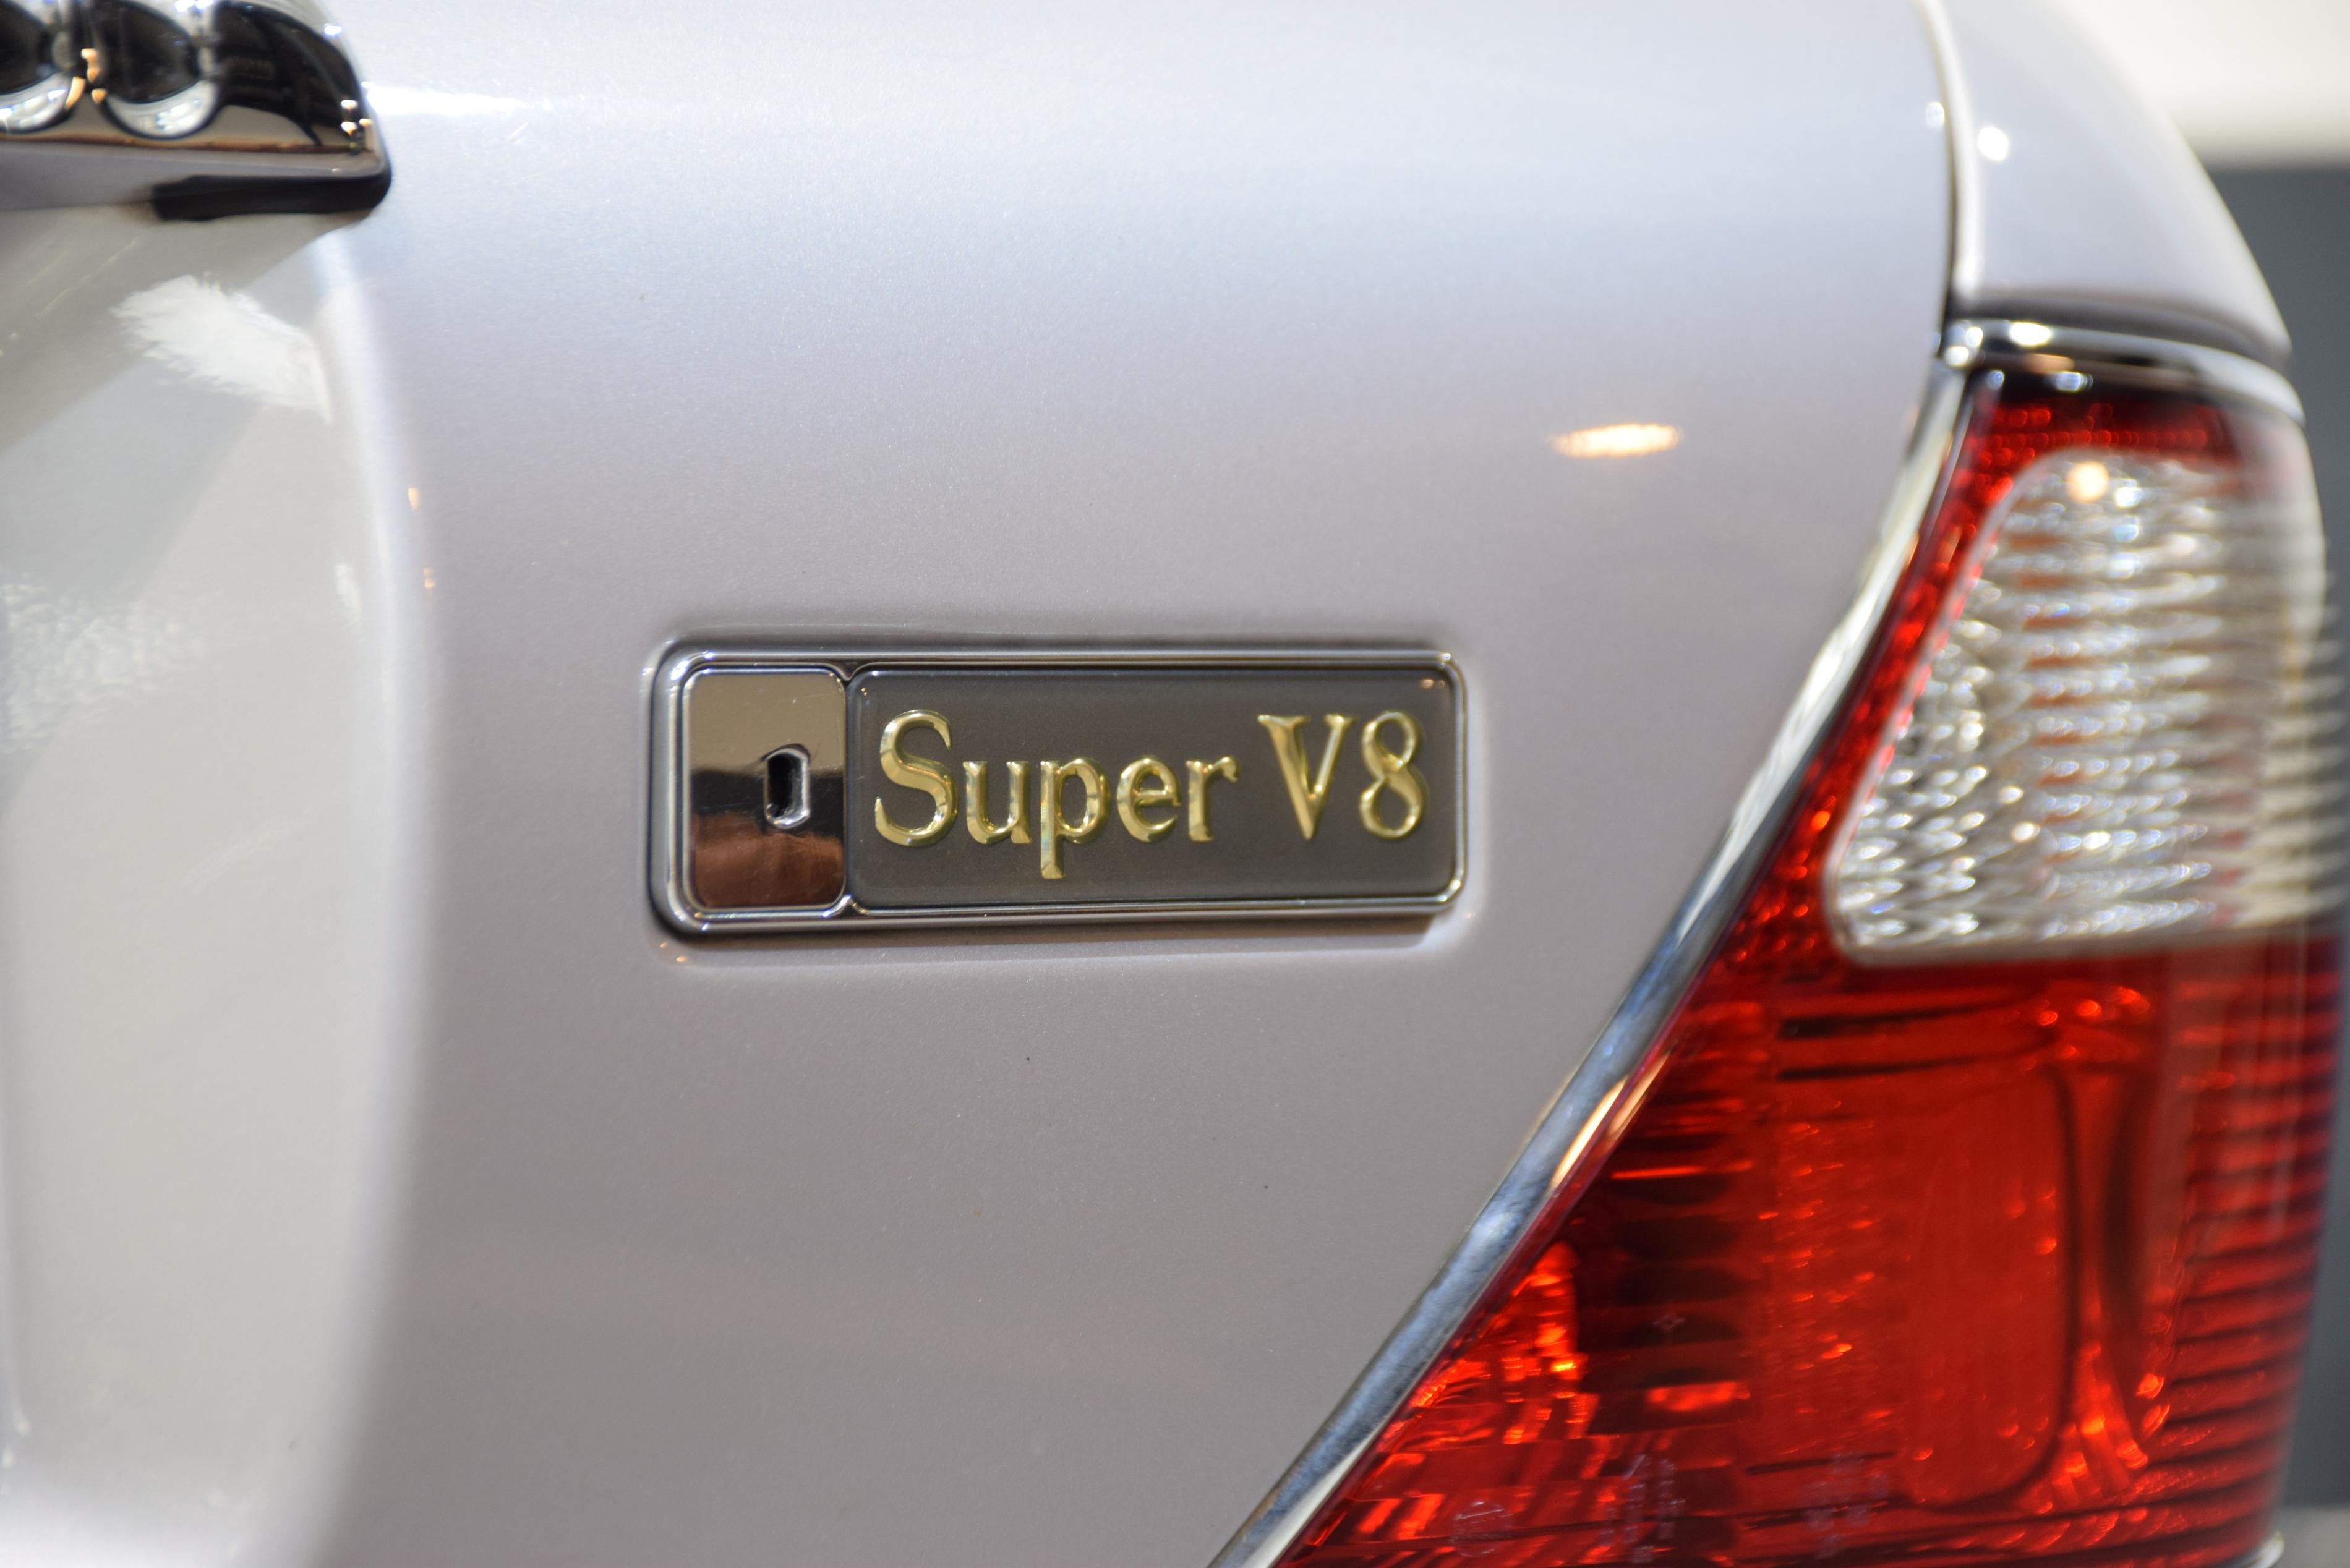 Super V8